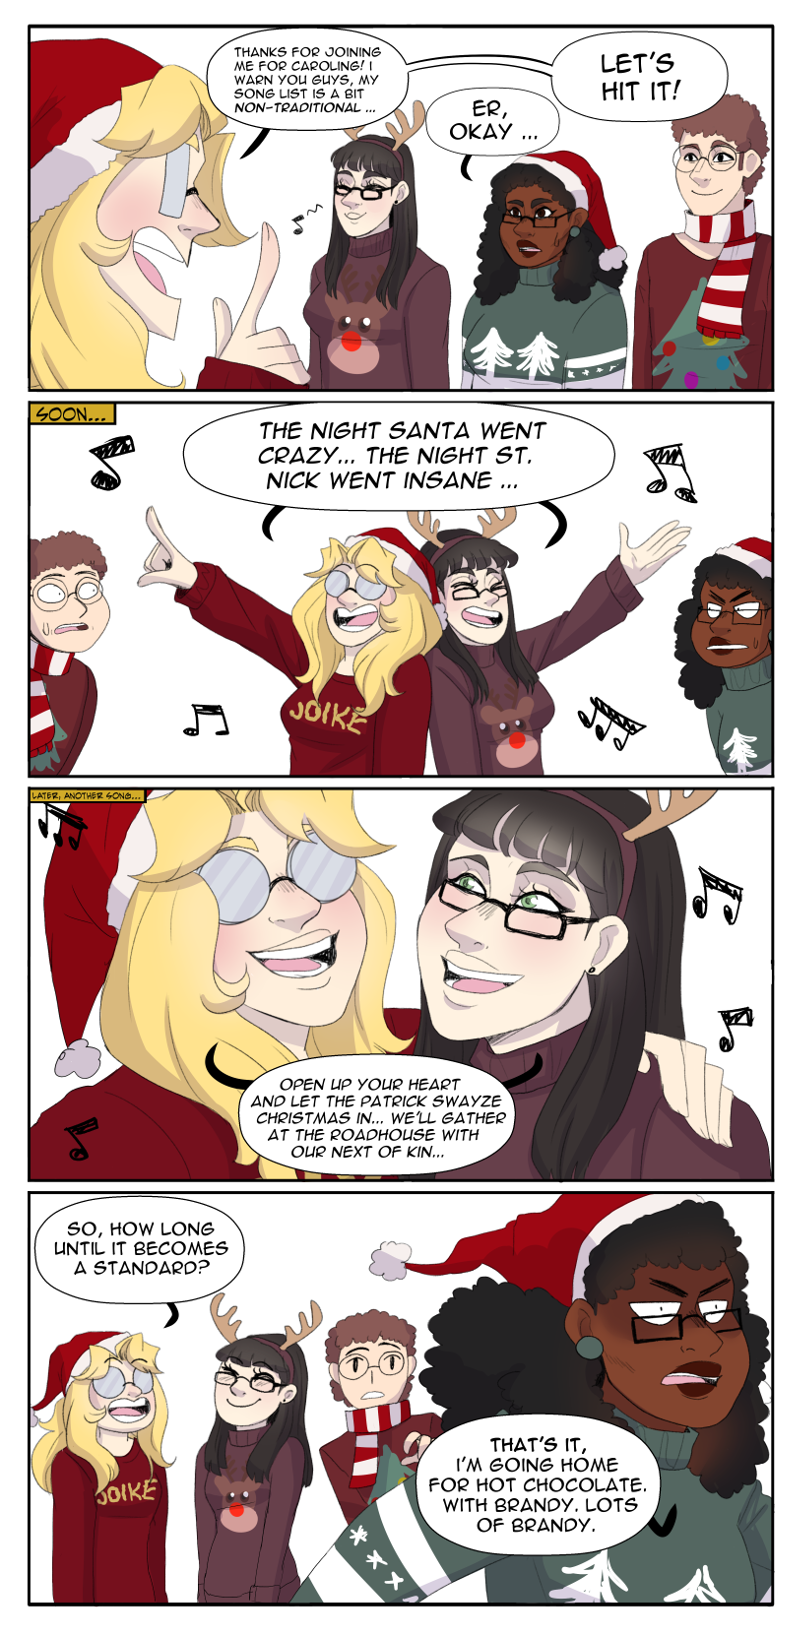 An Alvery Christmas Carol